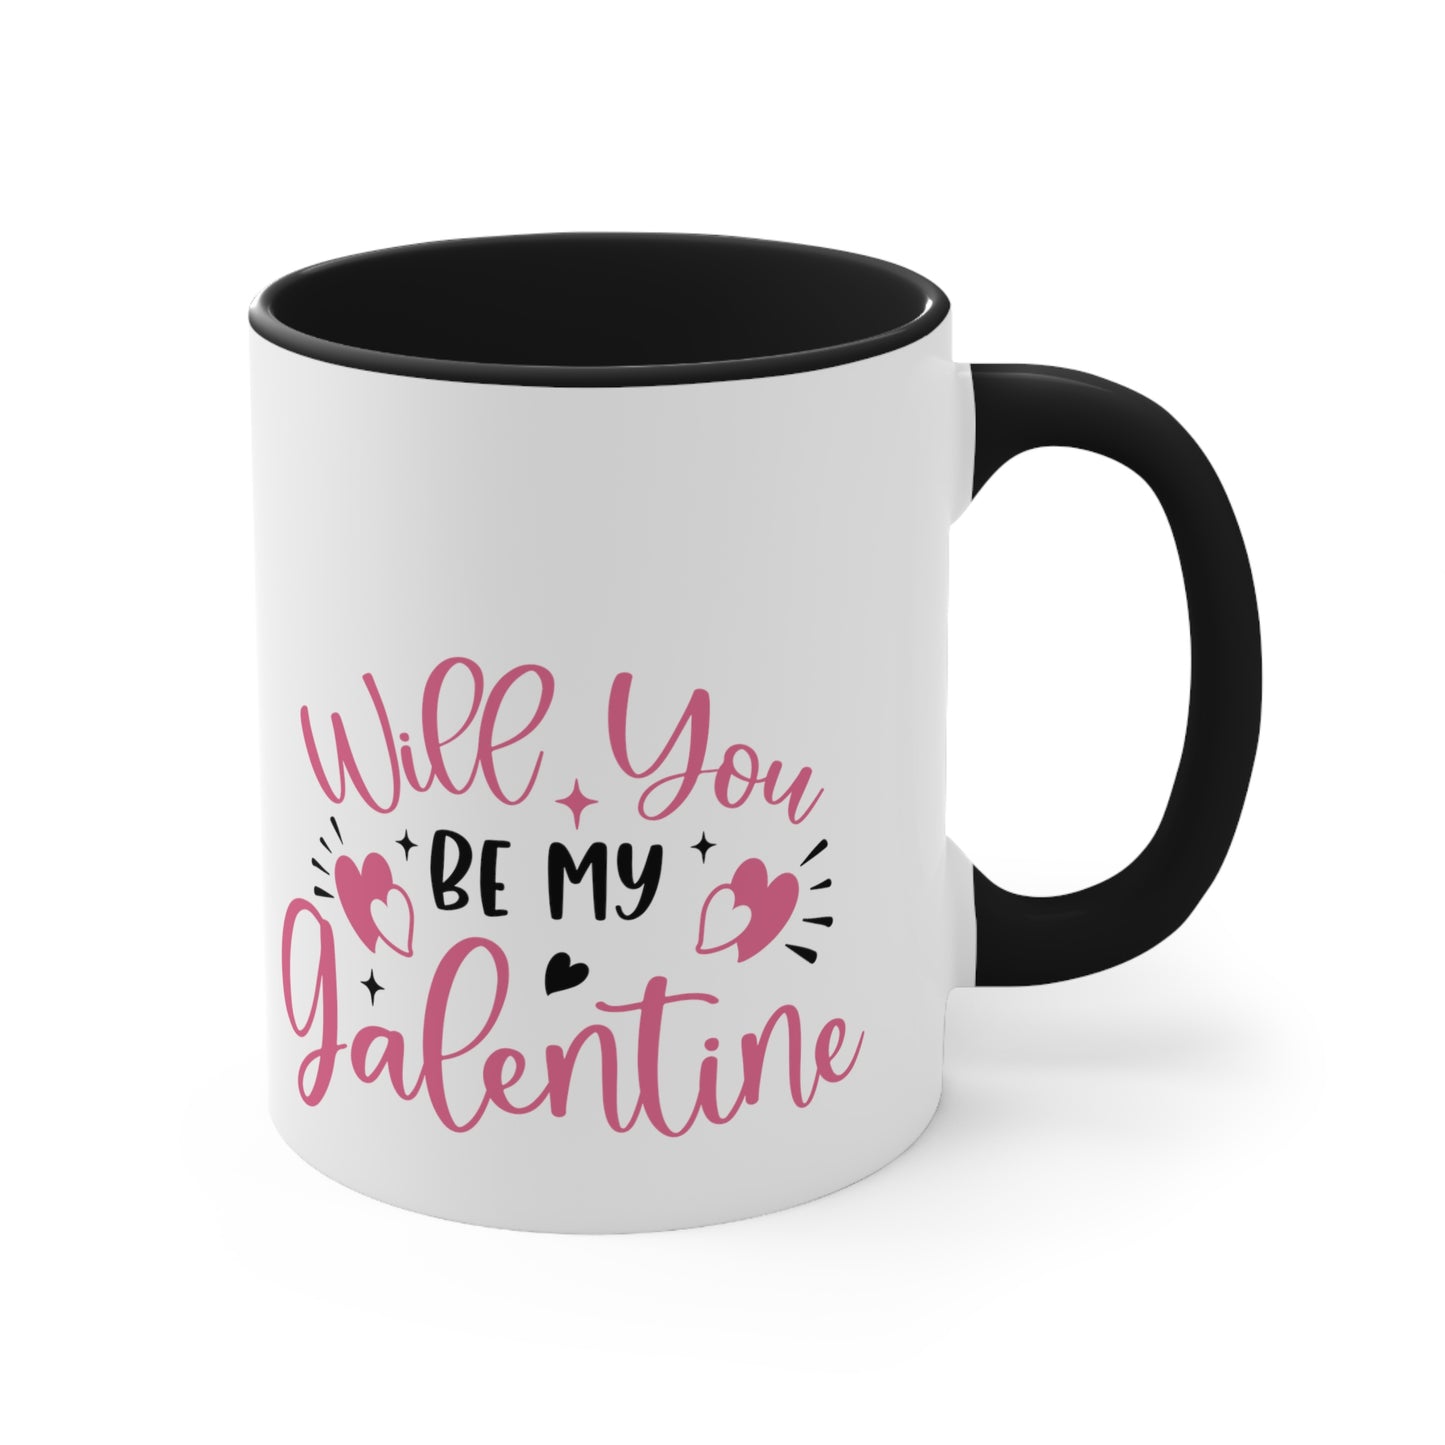 Will You Be My Galentine Accent Coffee Mug, 11oz